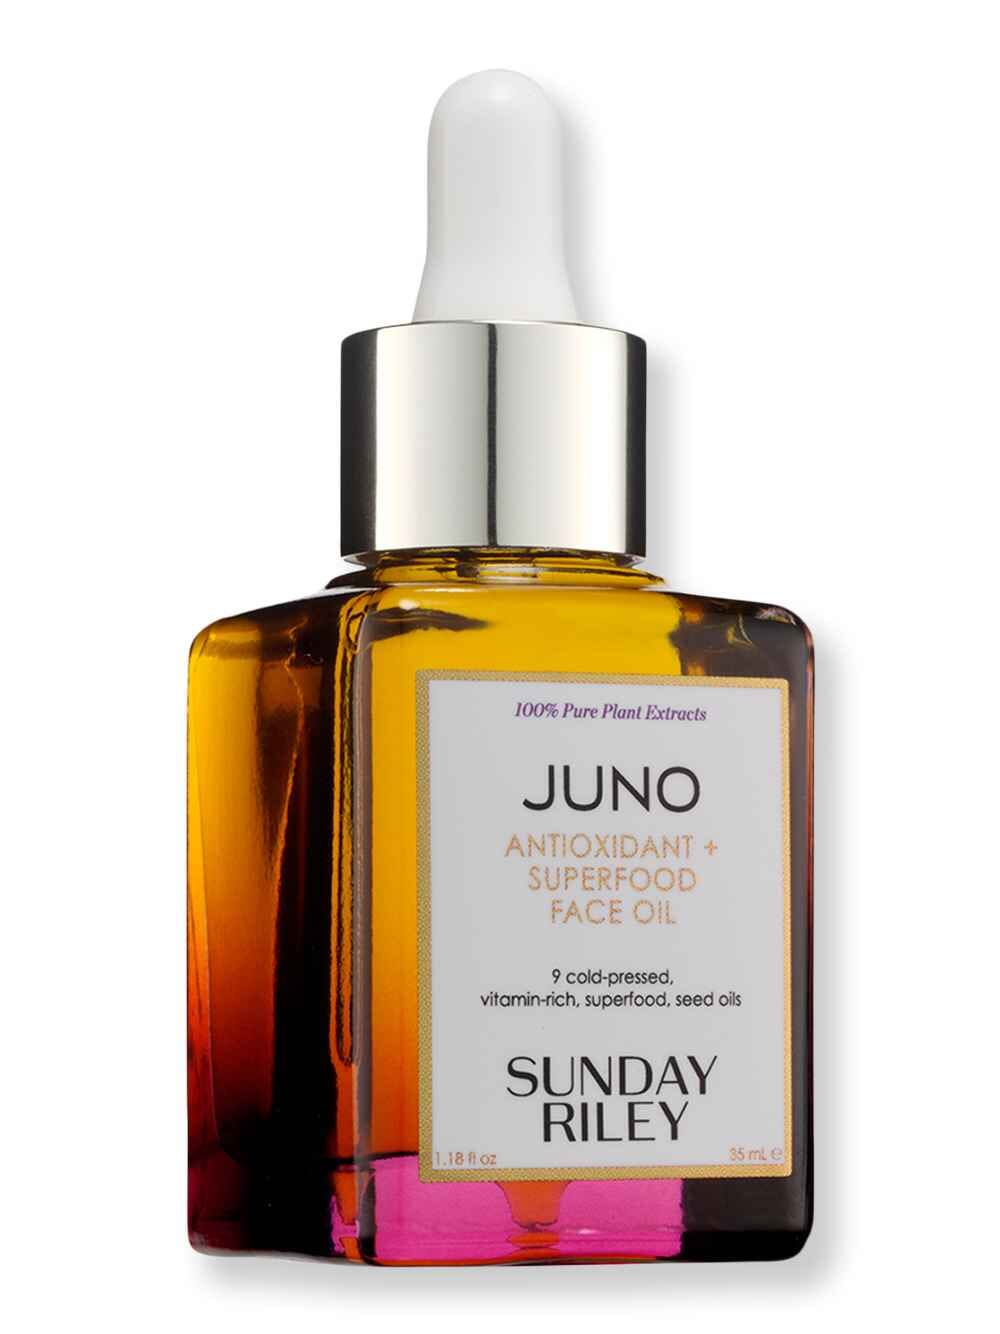 Sunday Riley Sunday Riley Juno Antioxidant + Superfood Face Oil 35 ml Skin Care Treatments 